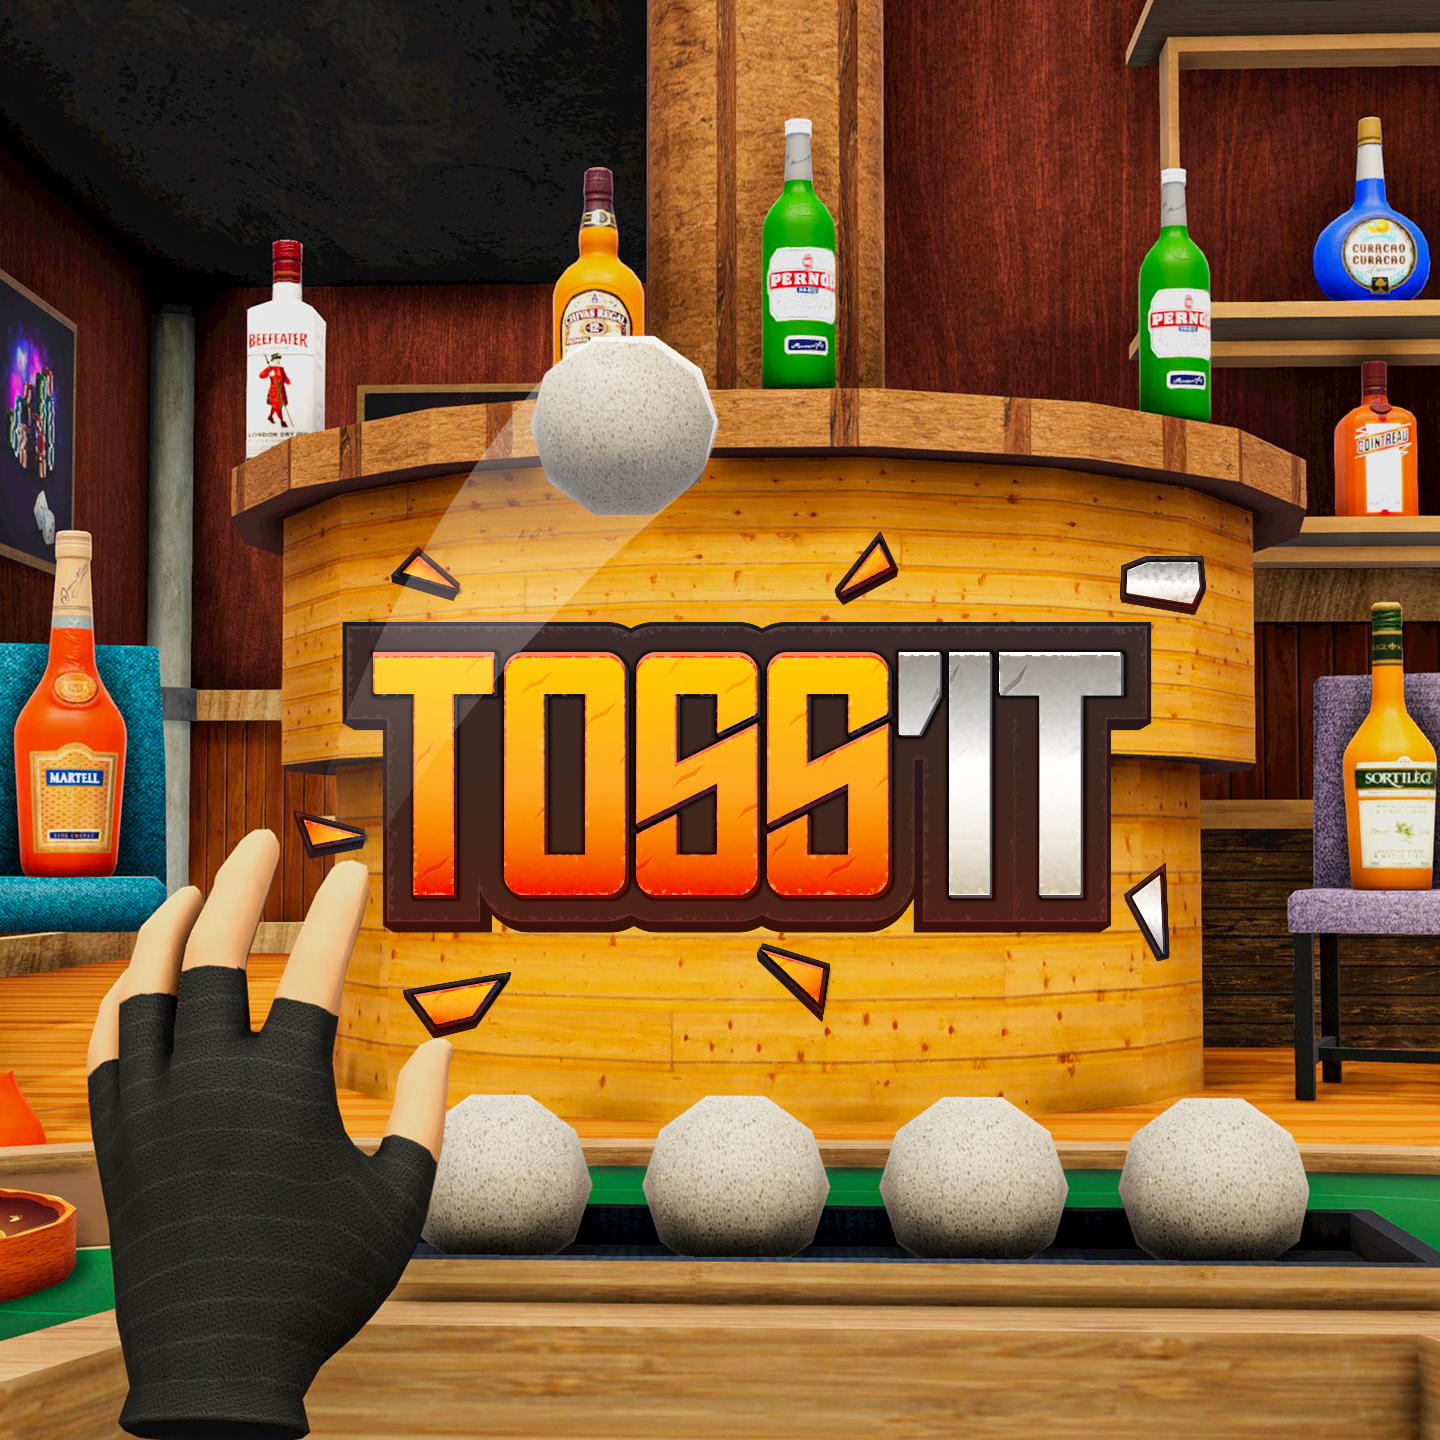 TOSSIT game 